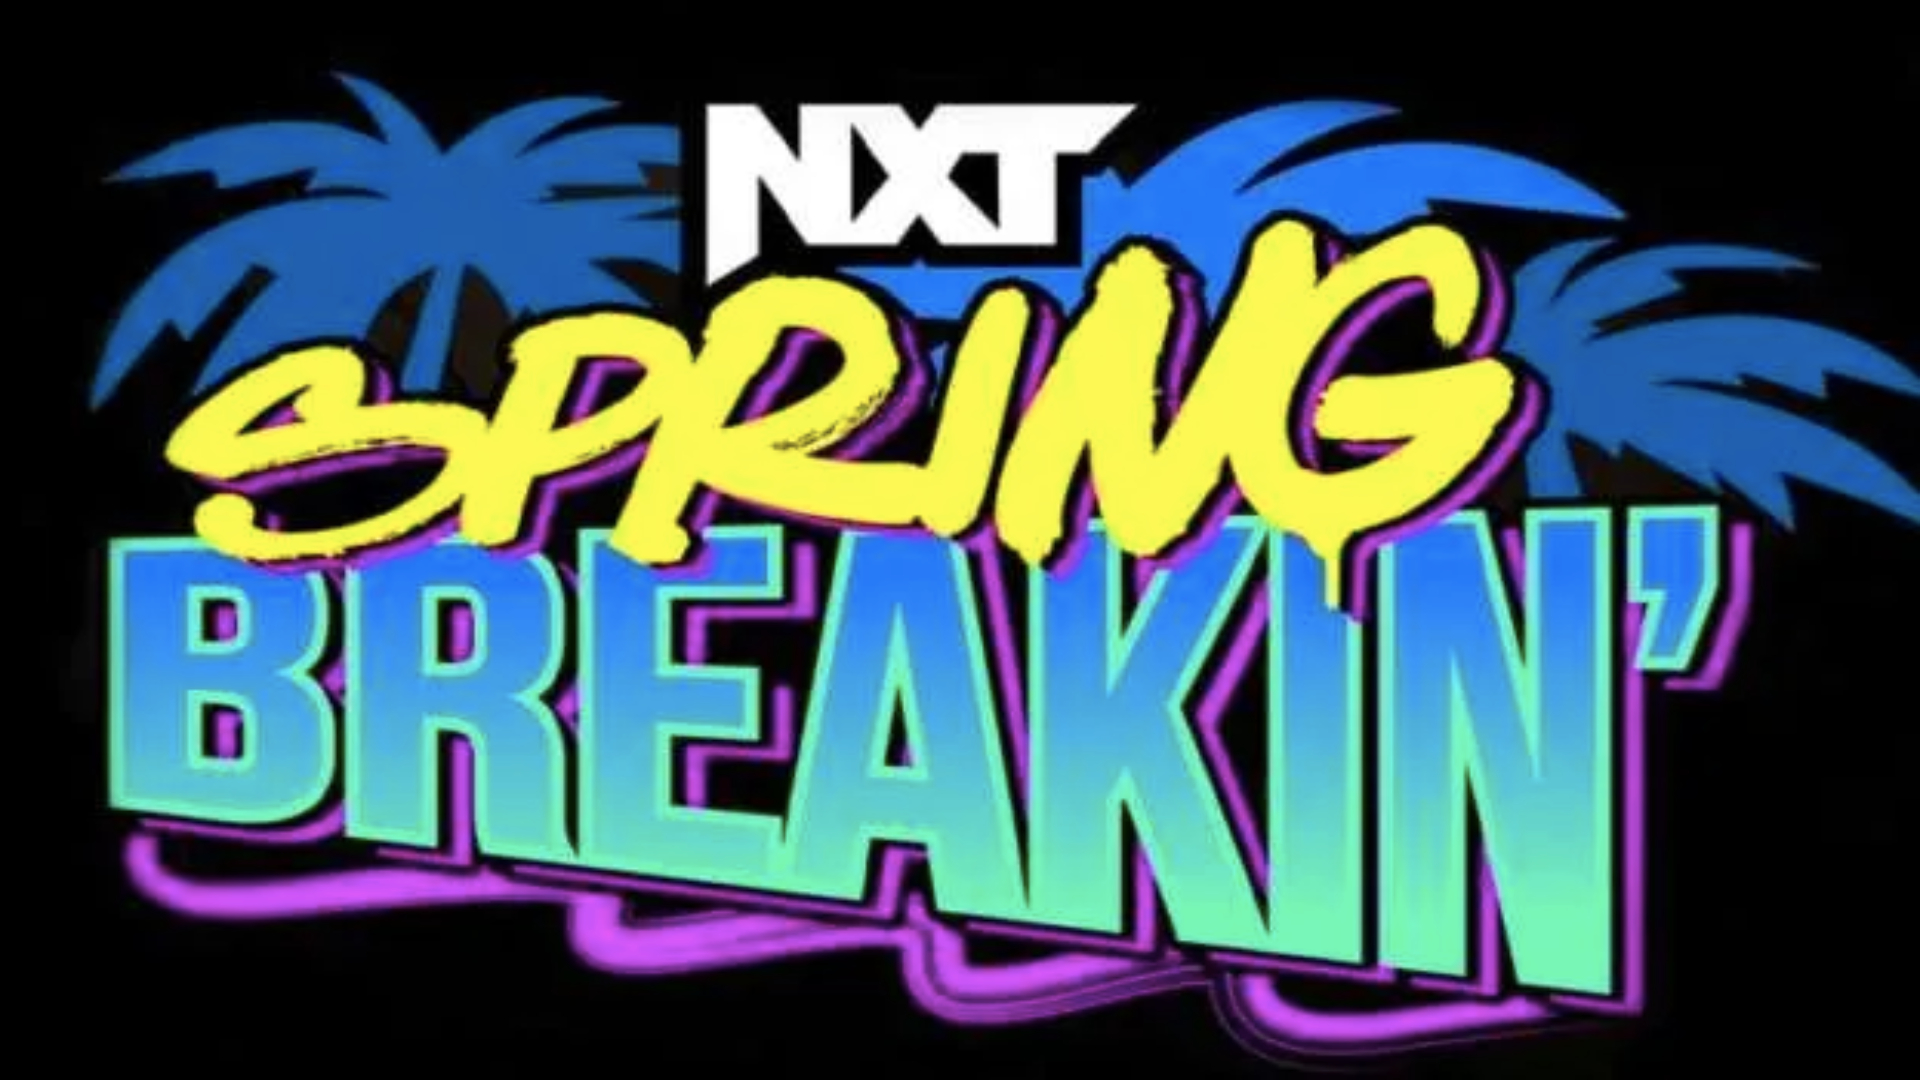 NXT 2.0: Spring Breakin'